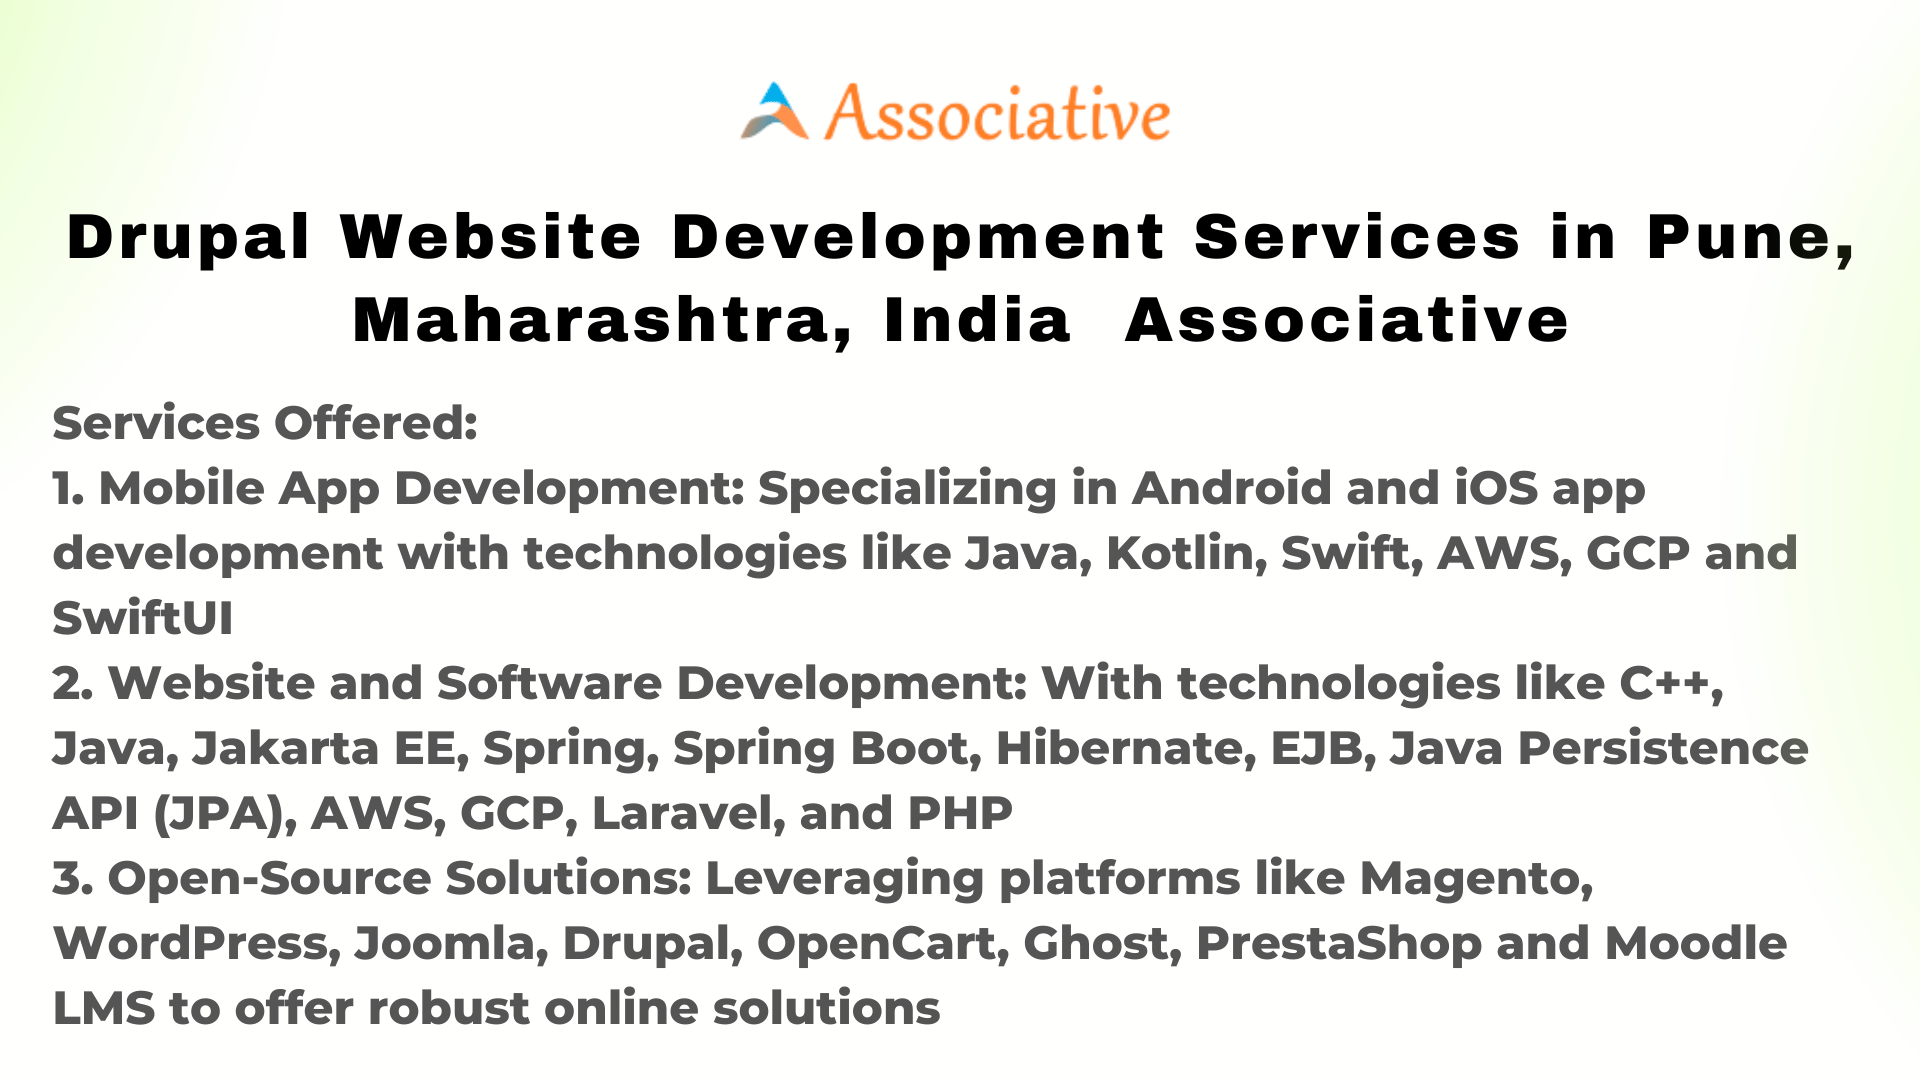 Drupal Website Development Services in Pune, Maharashtra, India Associative